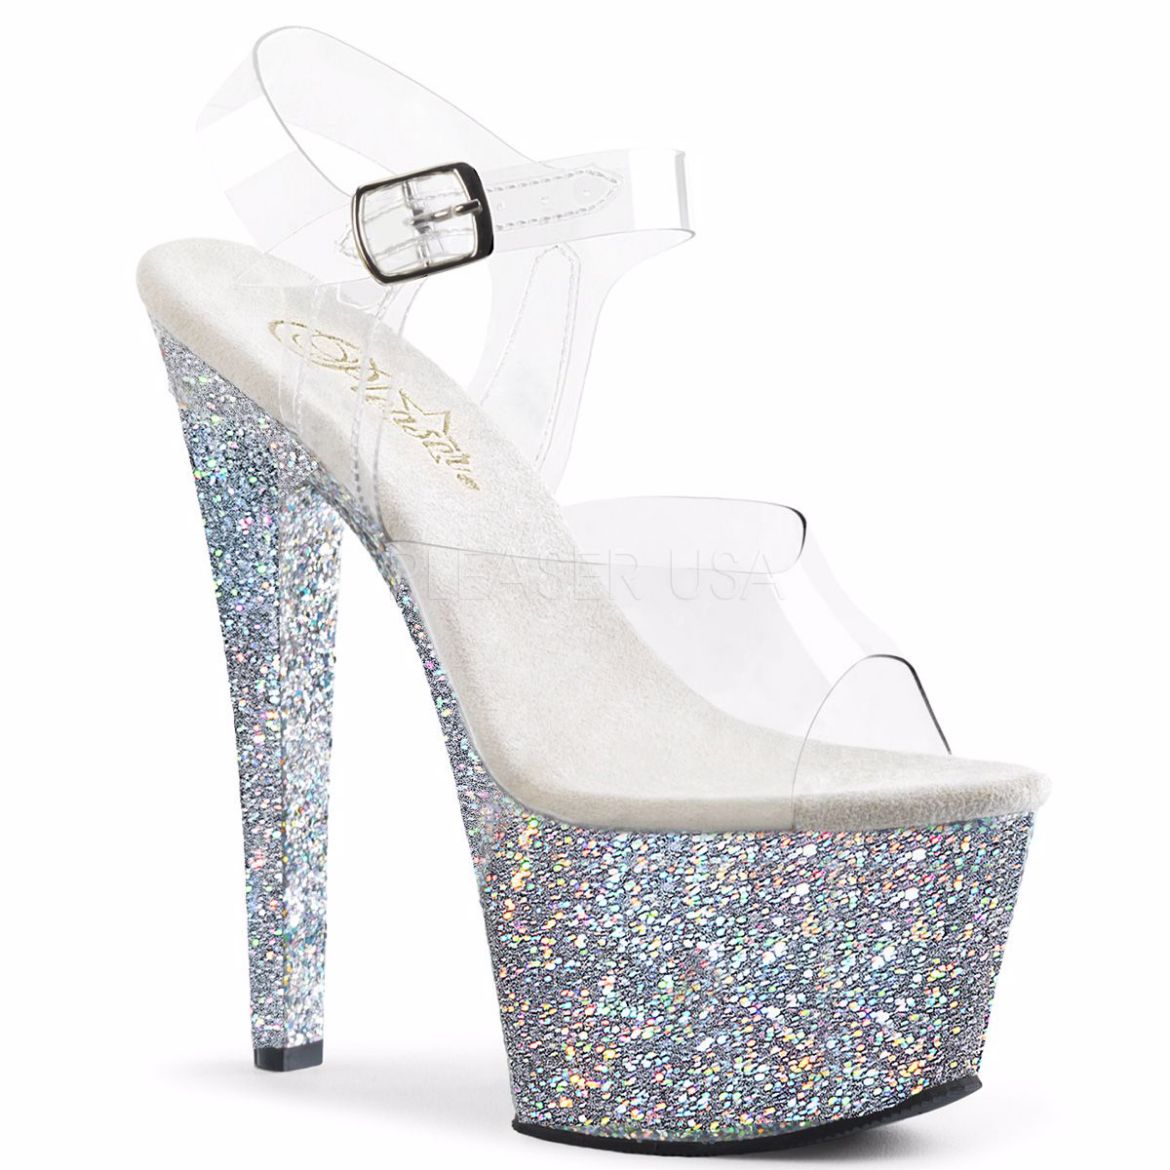 Product image of Pleaser Sky-308Lg Clear/Silver Multi Glitter, 7 inch (17.8 cm) Heel, 2 3/4 inch (7 cm) Platform Sandal Shoes